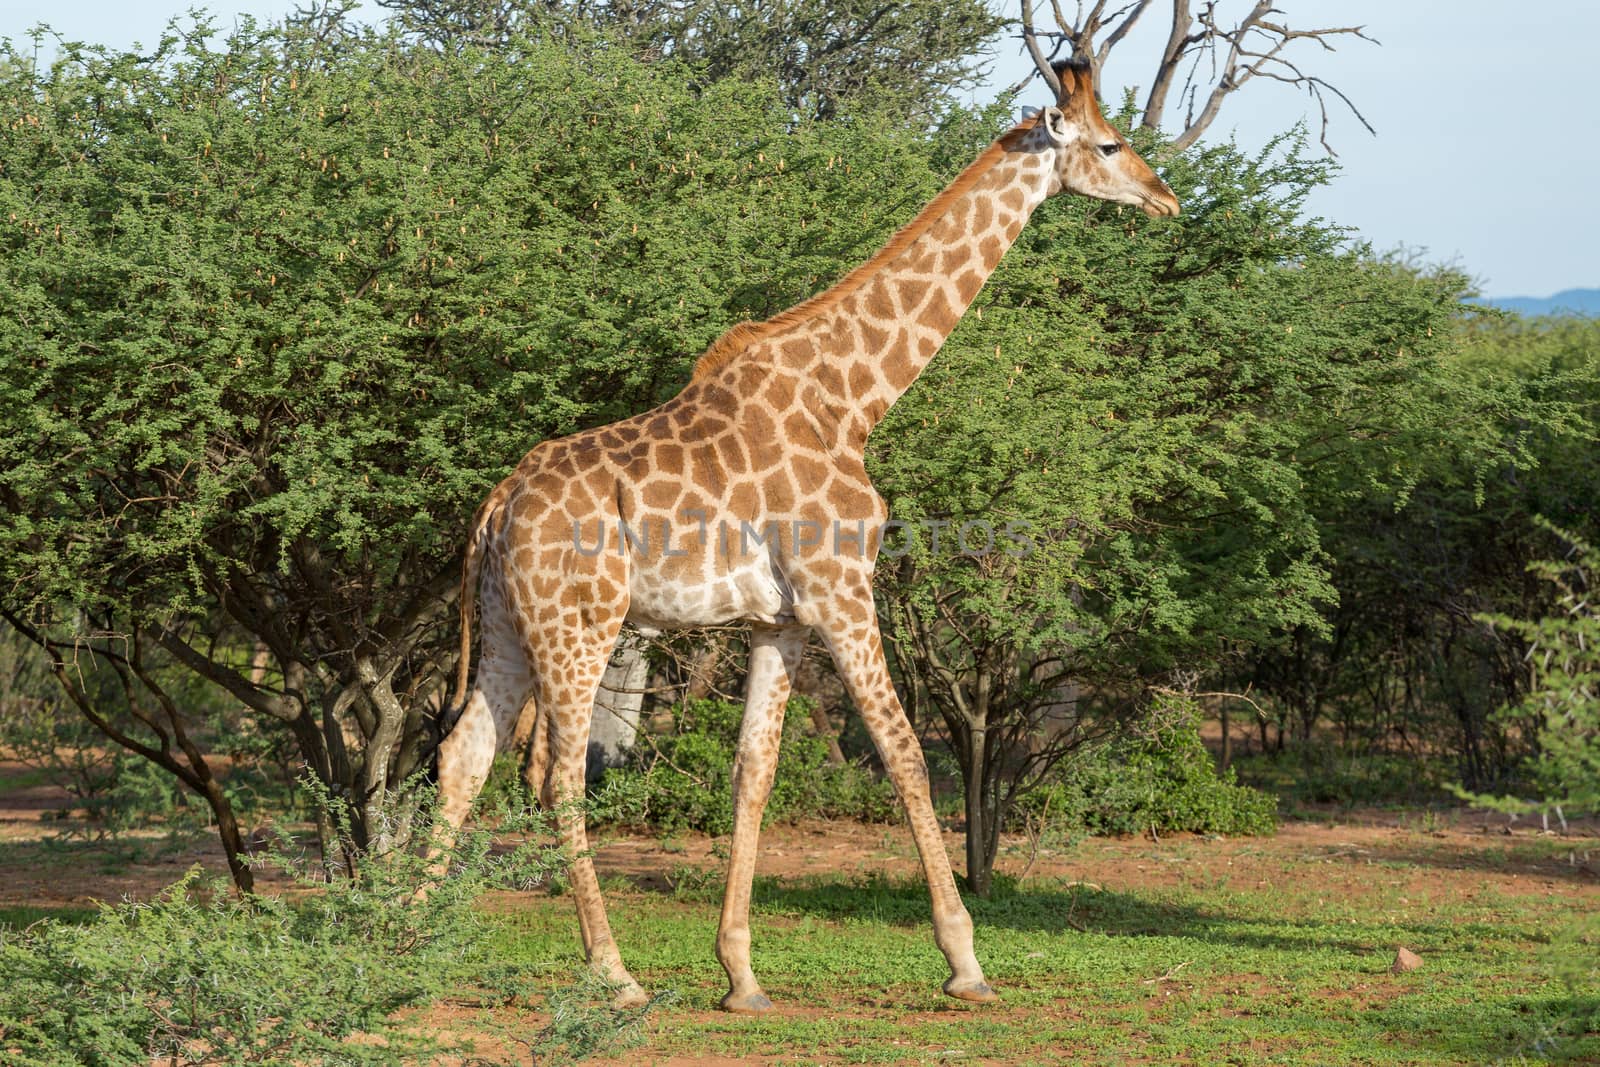 Giraffe at the Mokolodi Nature Reserve in Botswana